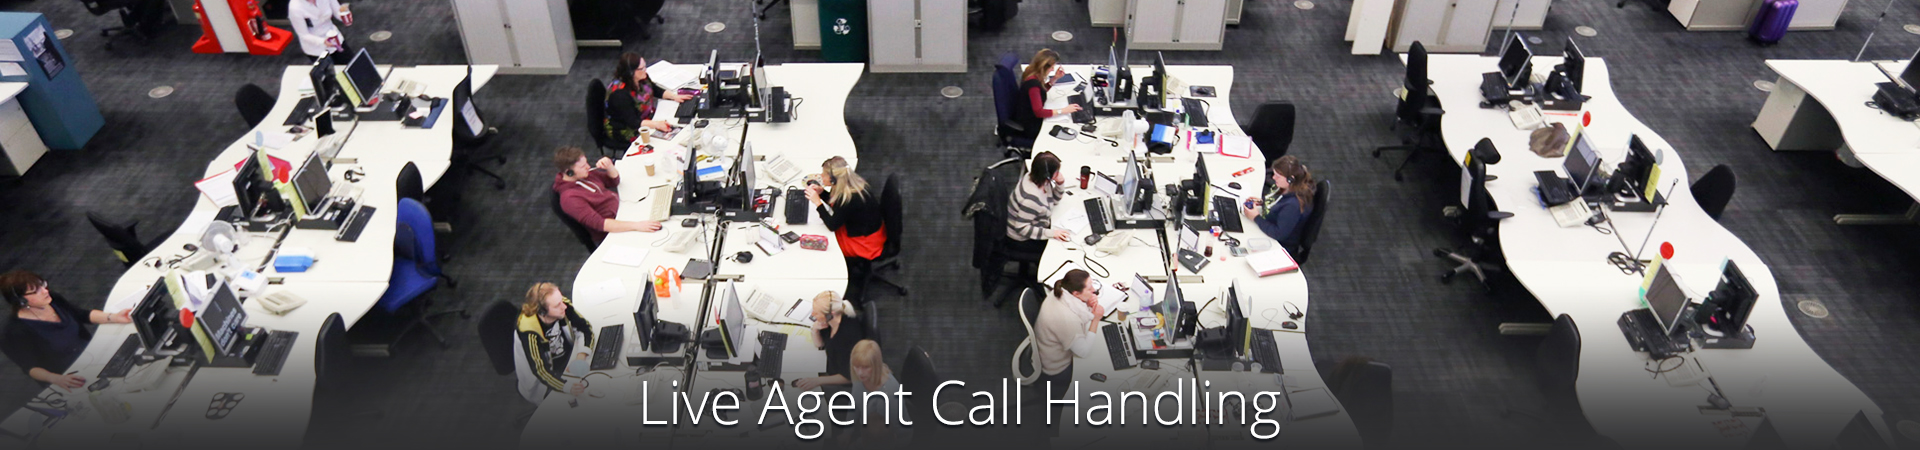 Live Agent Call Handling